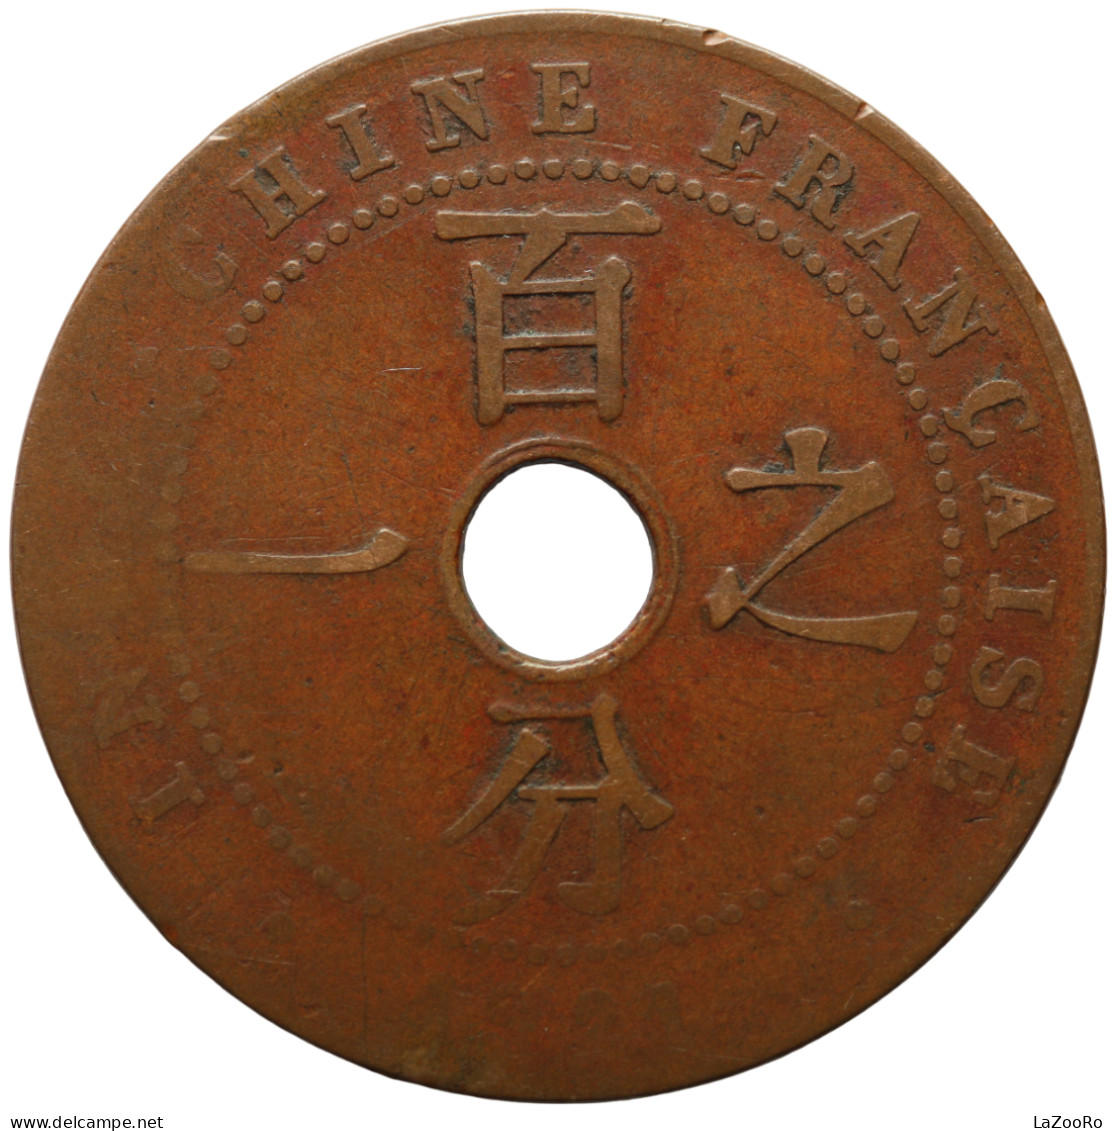 LaZooRo: French Indochina 1 Cent 1921 F / VF - French Indochina